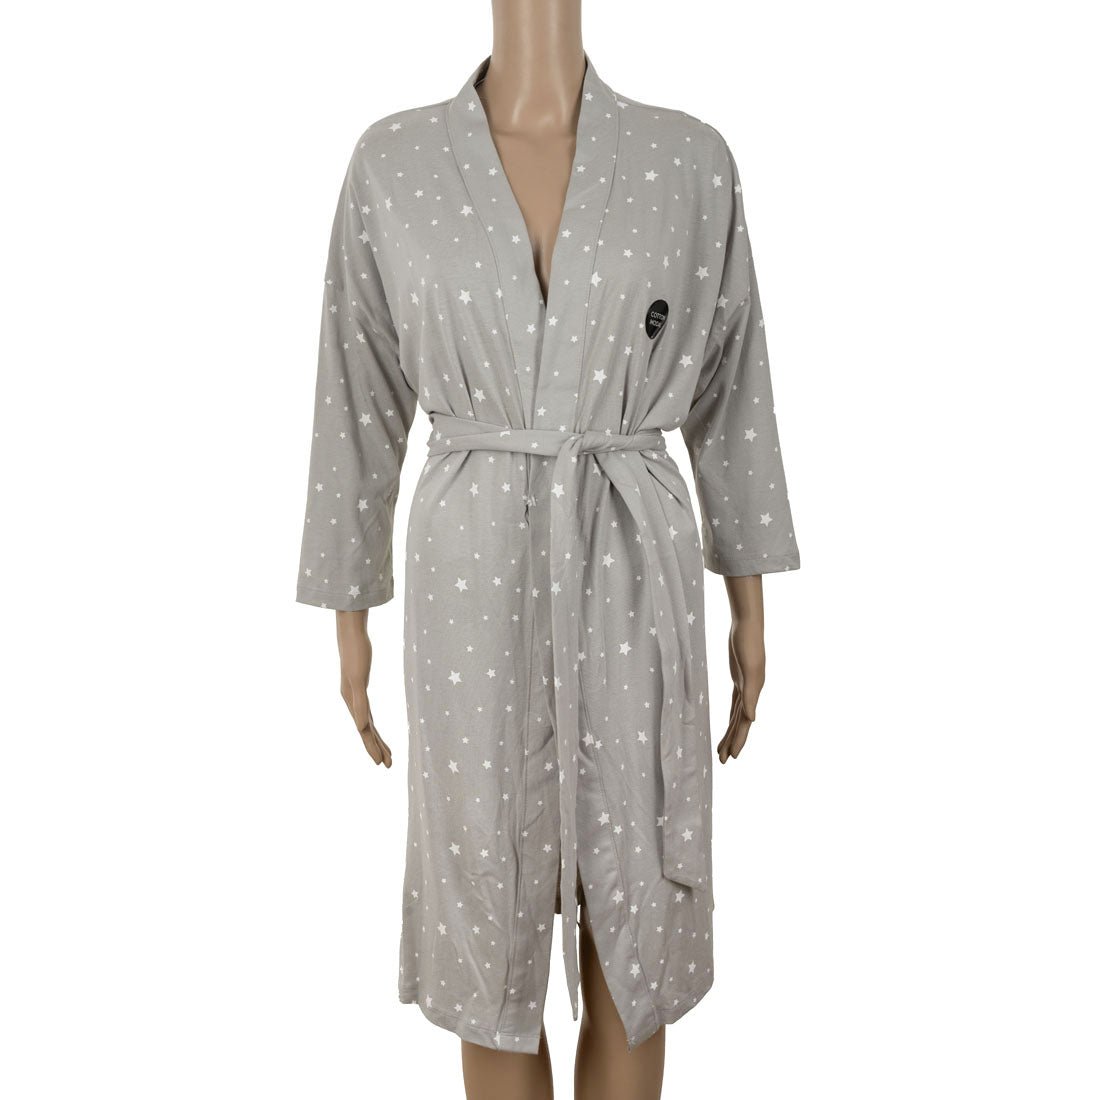 M&S Brand New Sleep Wear Robe - mymadstore.com